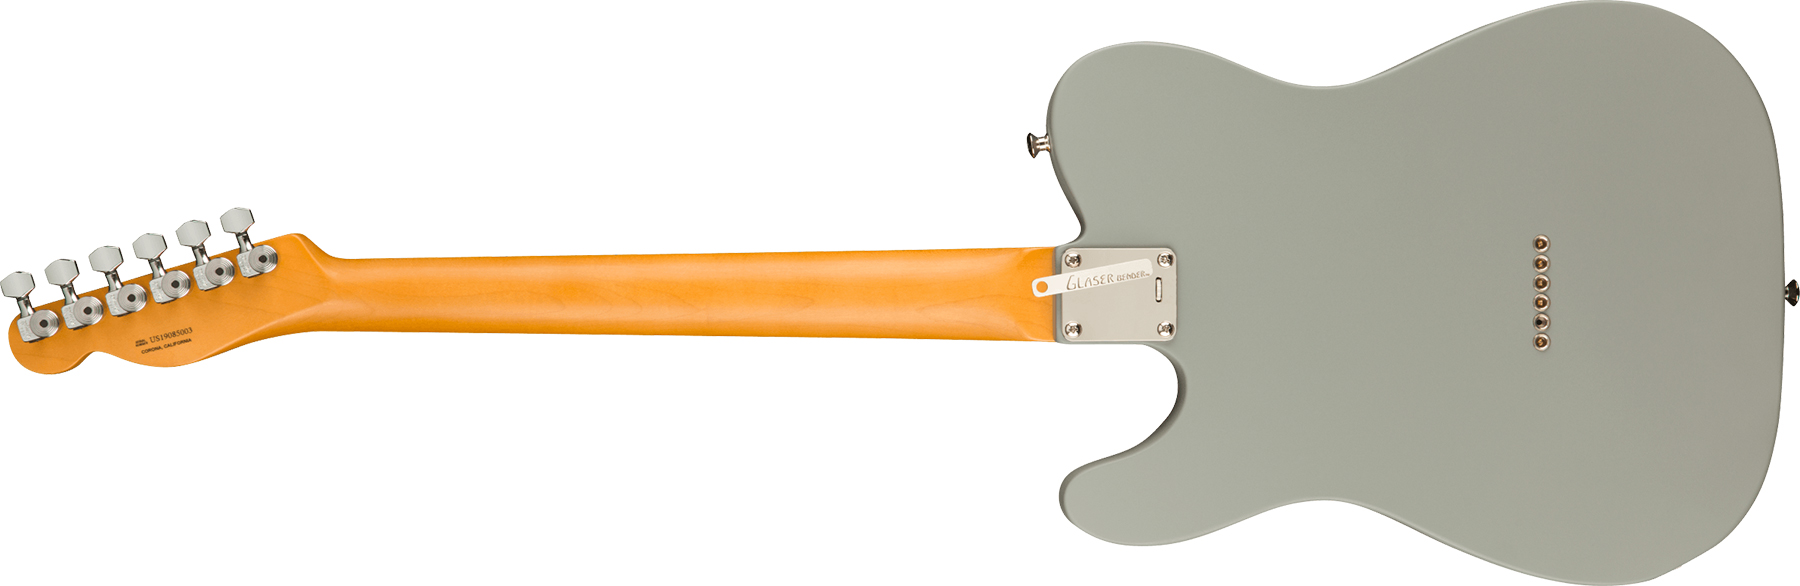 Fender Brent Mason Tele Signature Usa Ssh B-bender Mn - Primer Gray - E-Gitarre in Teleform - Variation 1